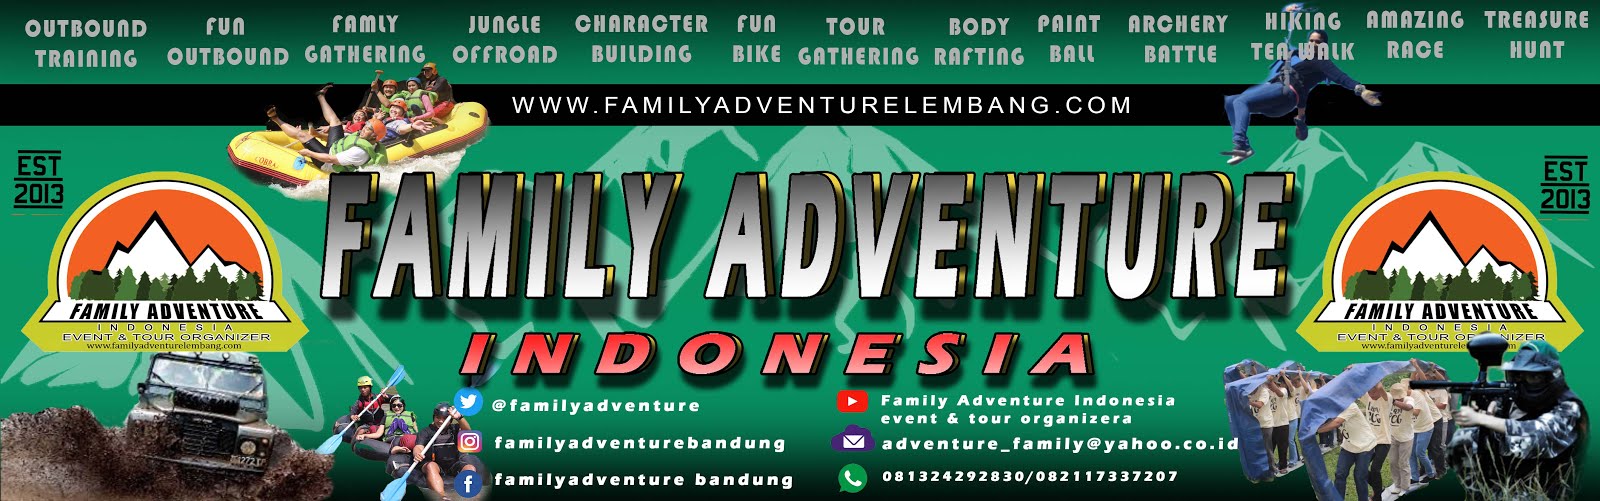 FAMILY GATHERING LEMBANG BANDUNG | FAMILY ADVENTURE INDONESIA